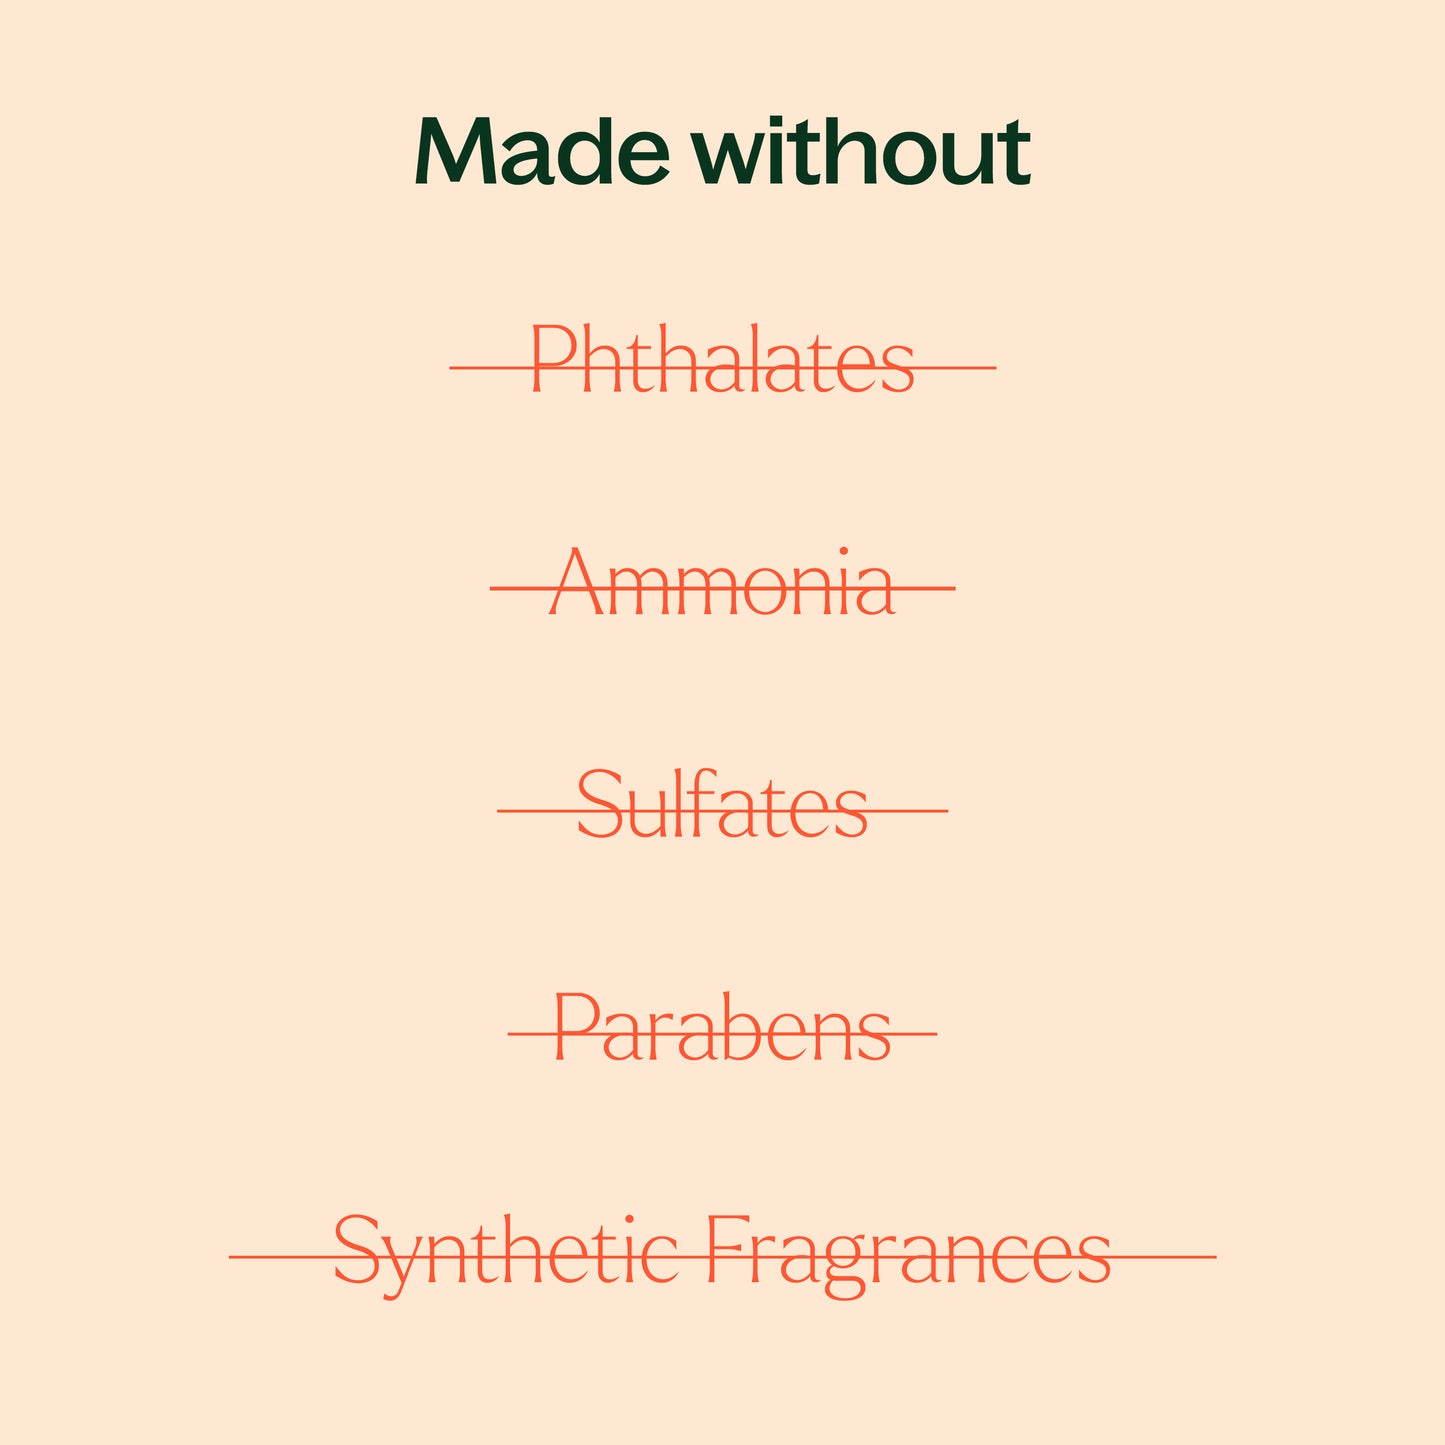 made without phthalates, ammonia, sulfates, parabens, synthetic fragrances